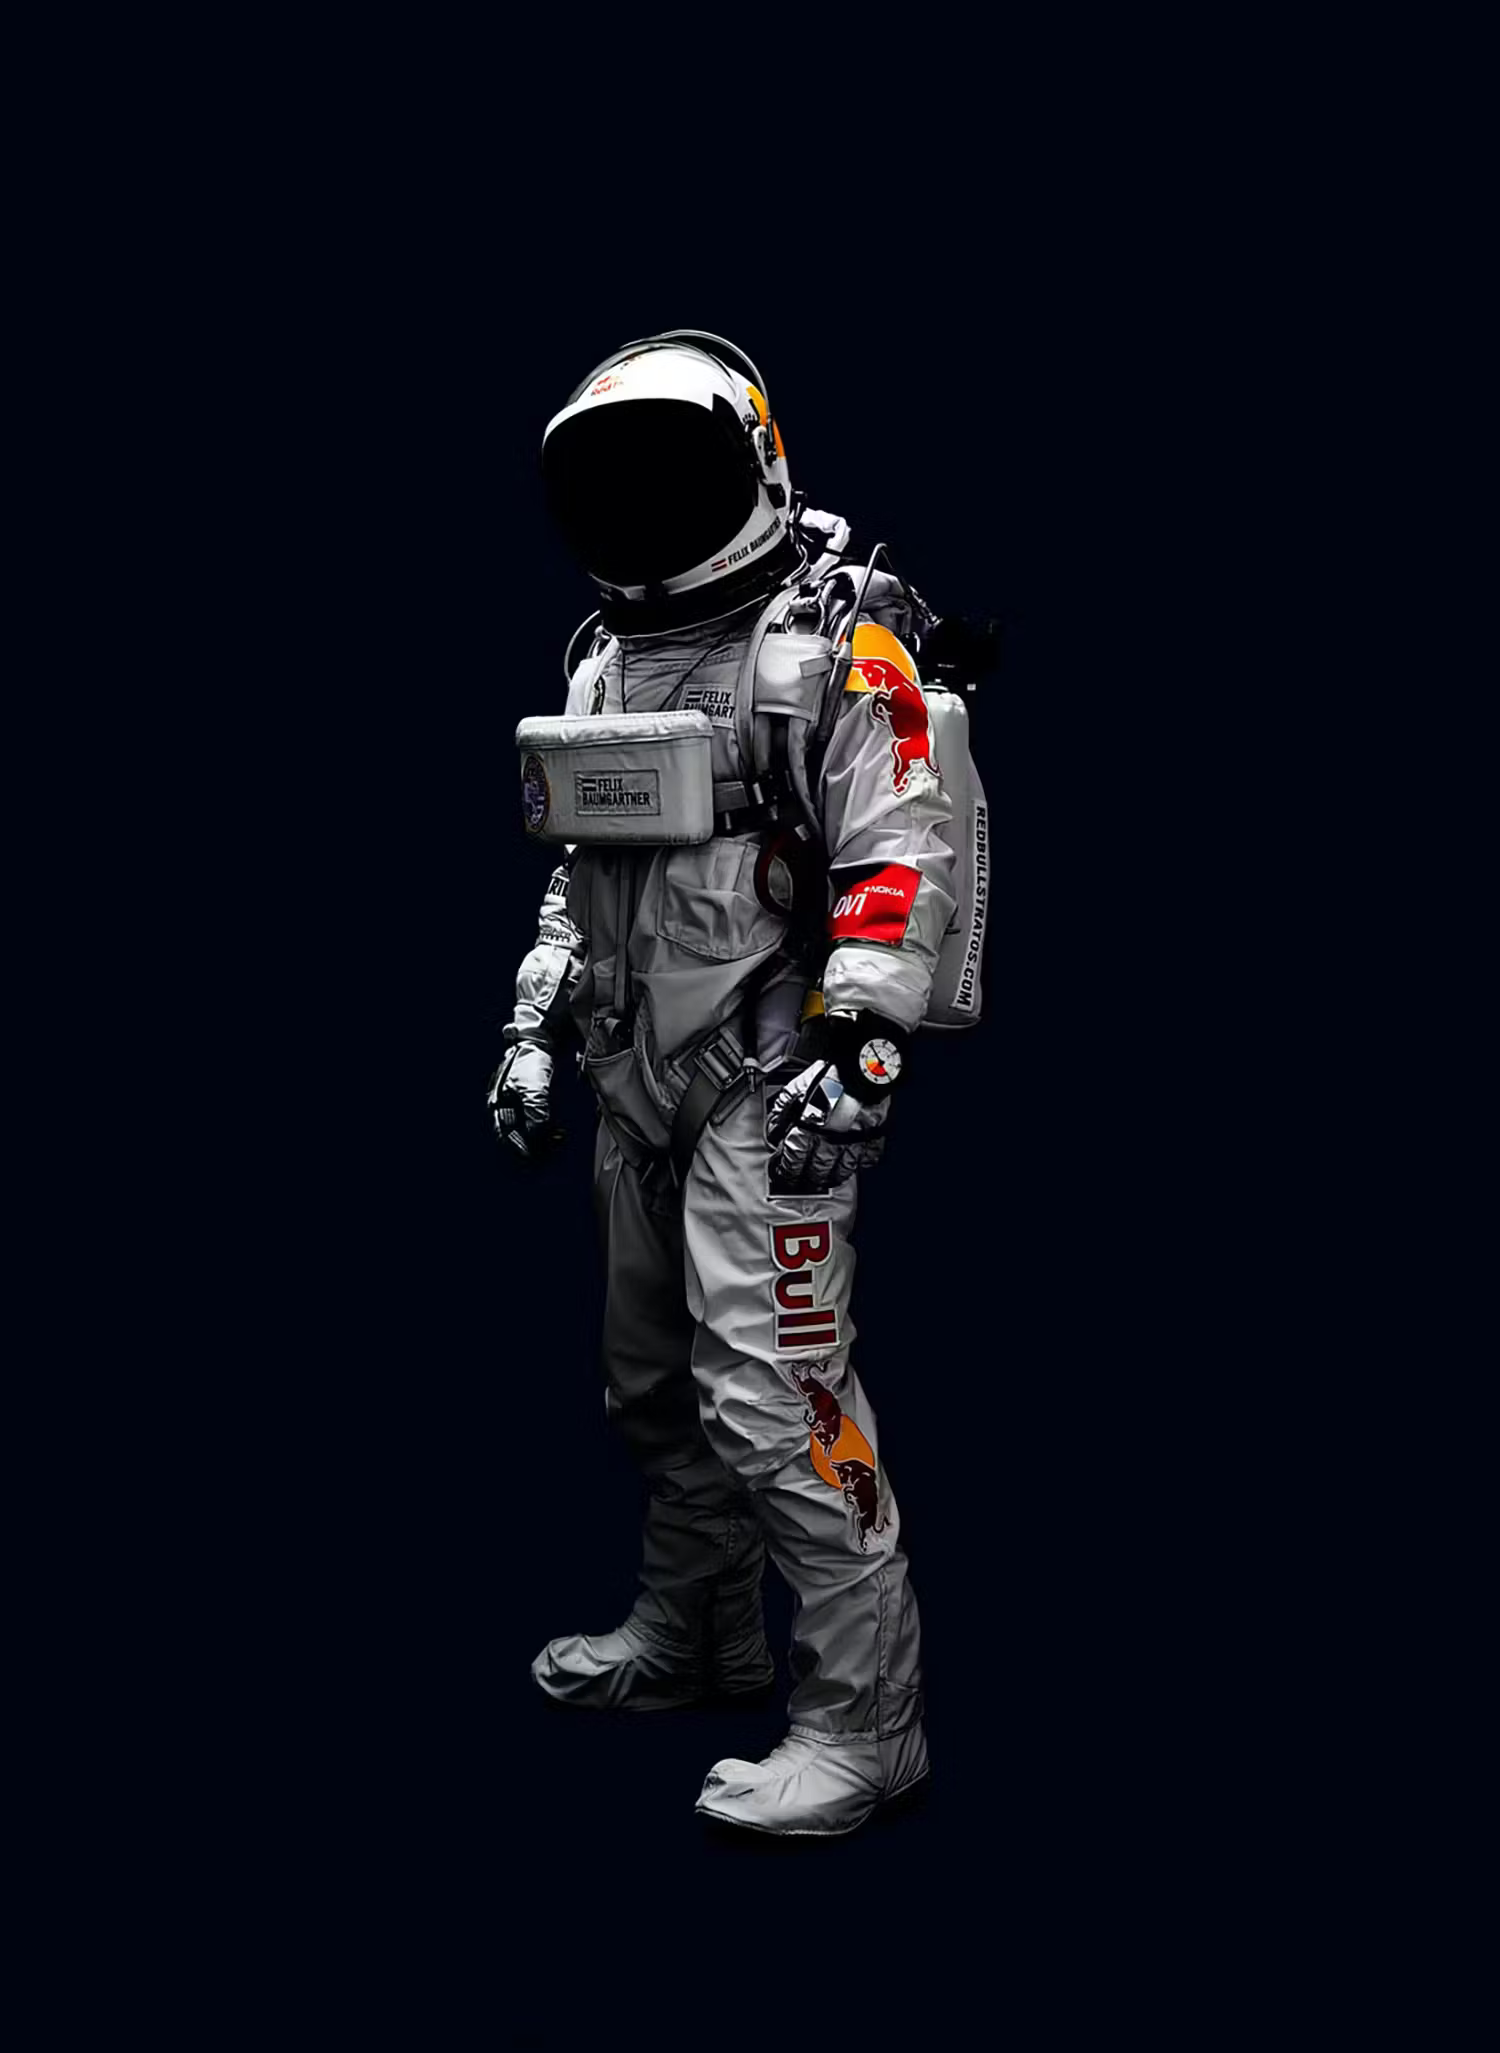 0113 astronaut